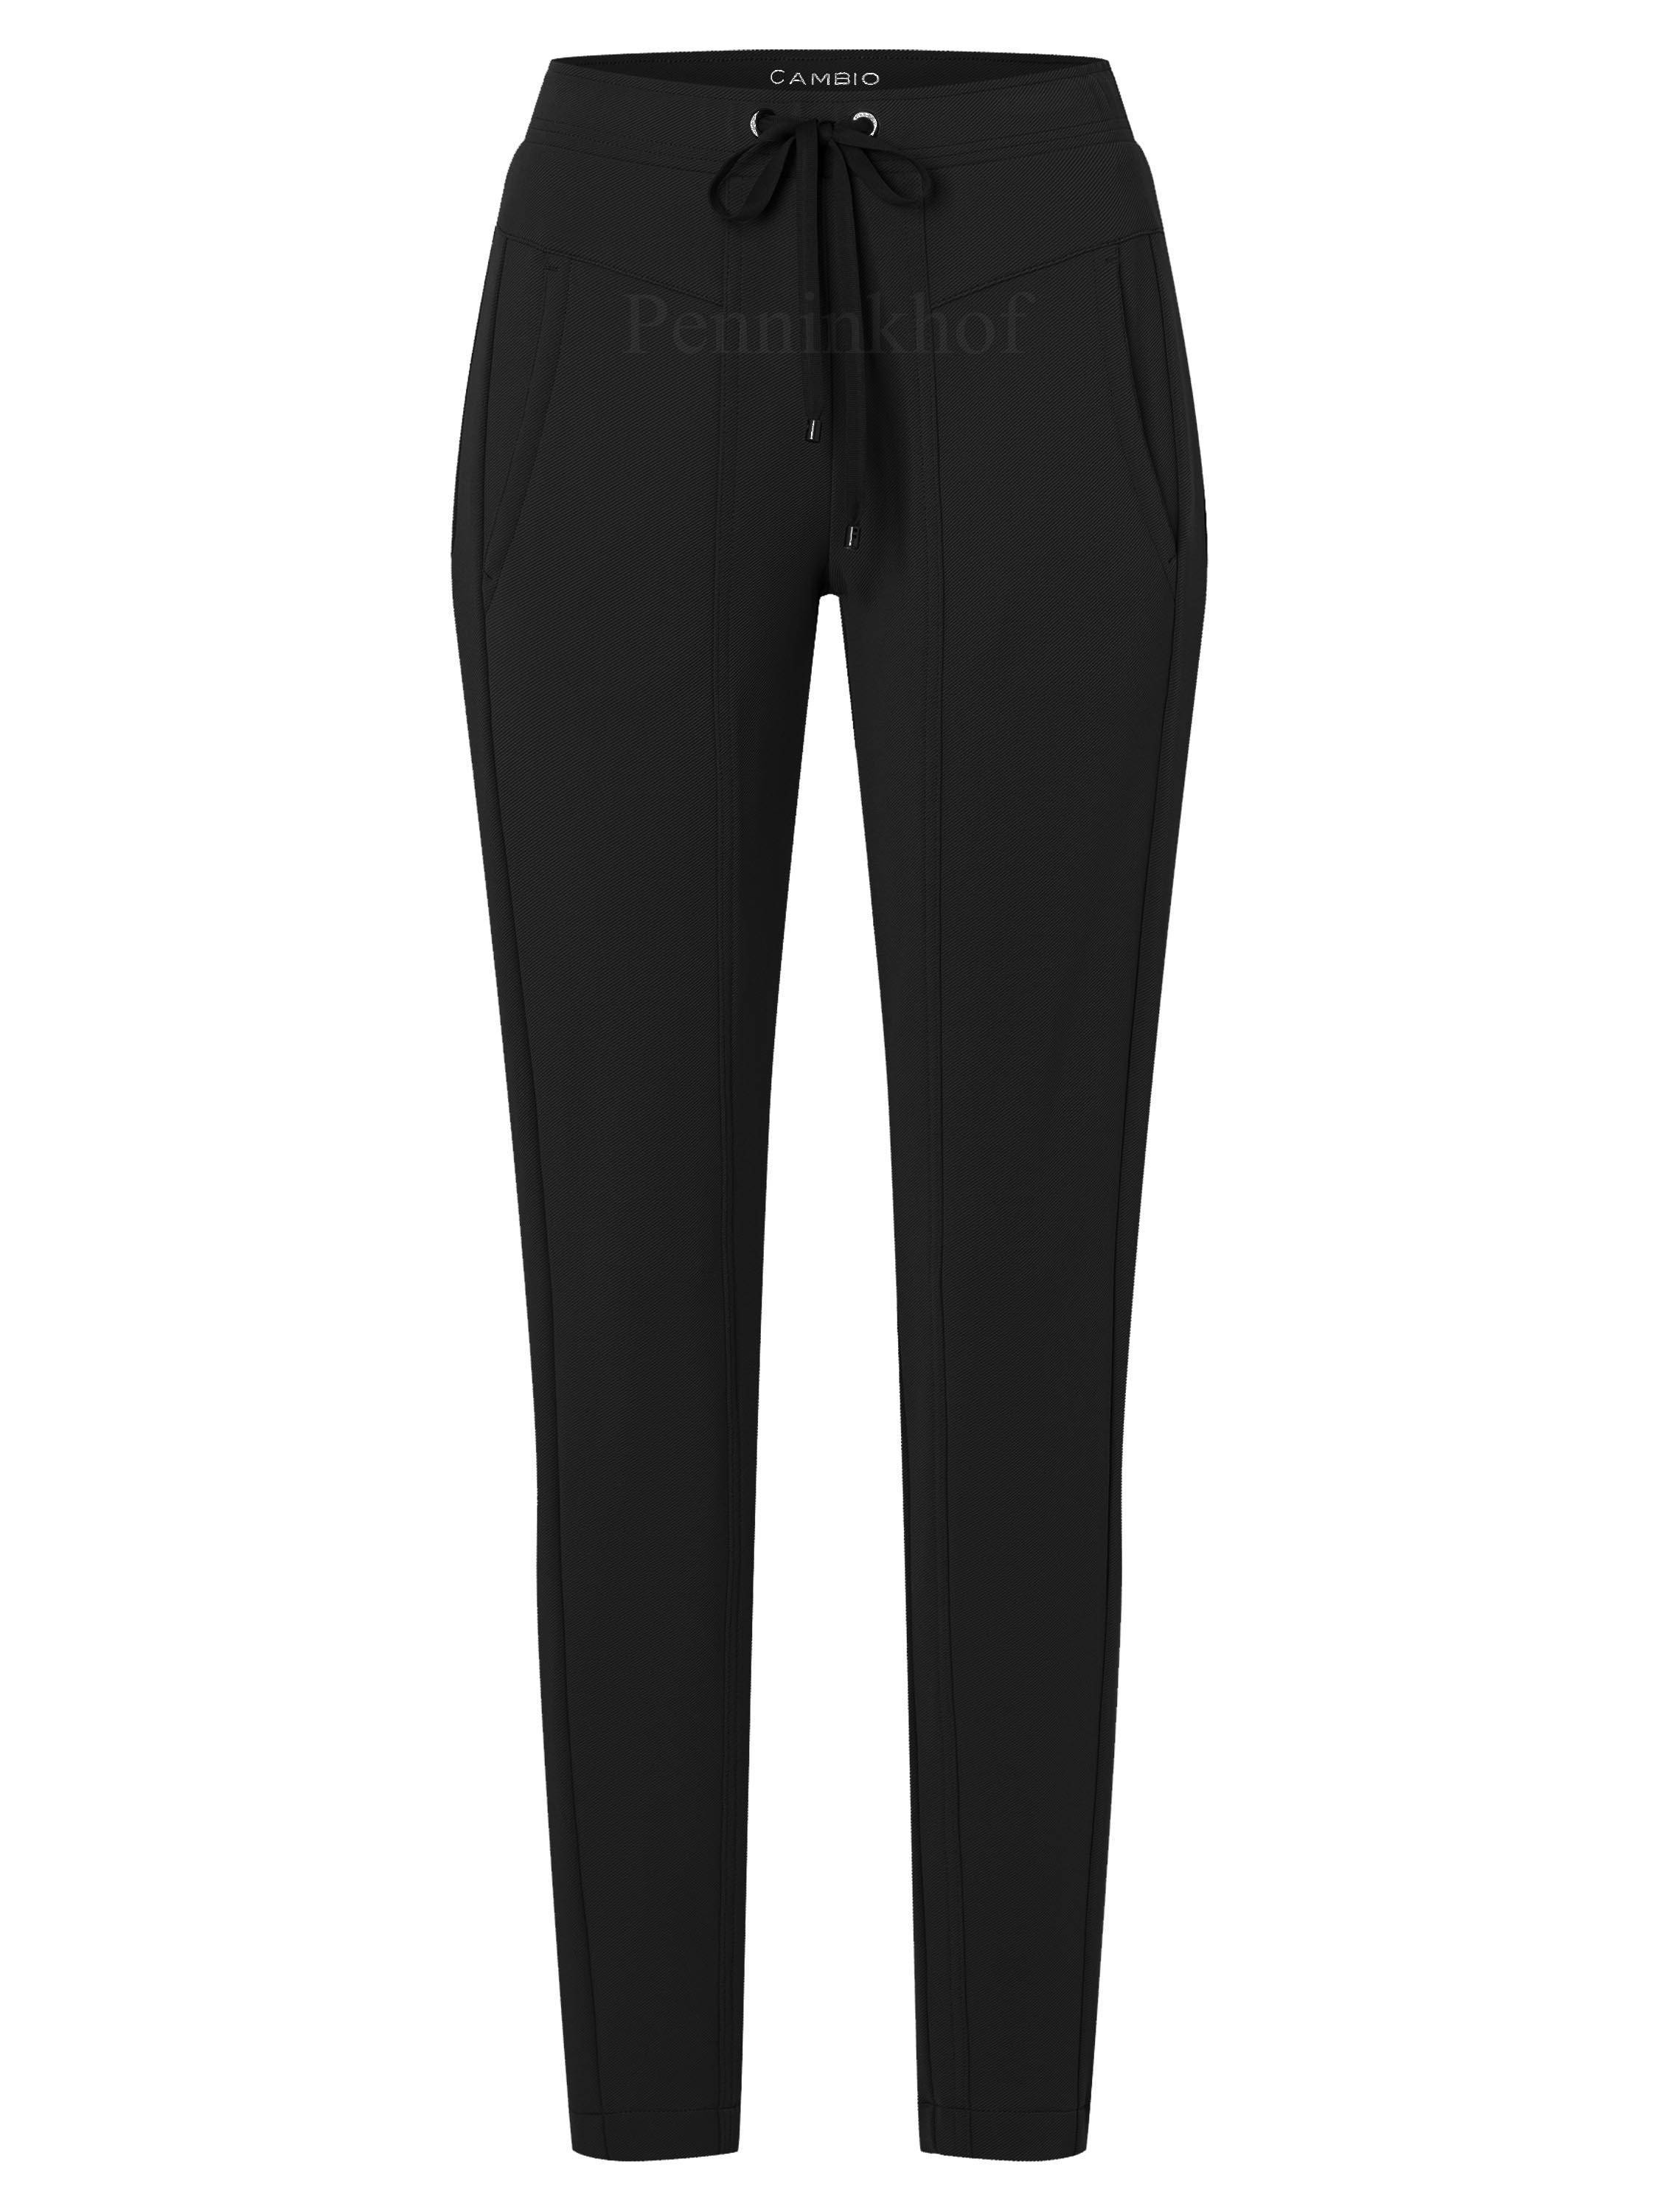 Cambio trousers JORDAN SEAM 6337-0205-01 Black by Penninkhoffashion.com